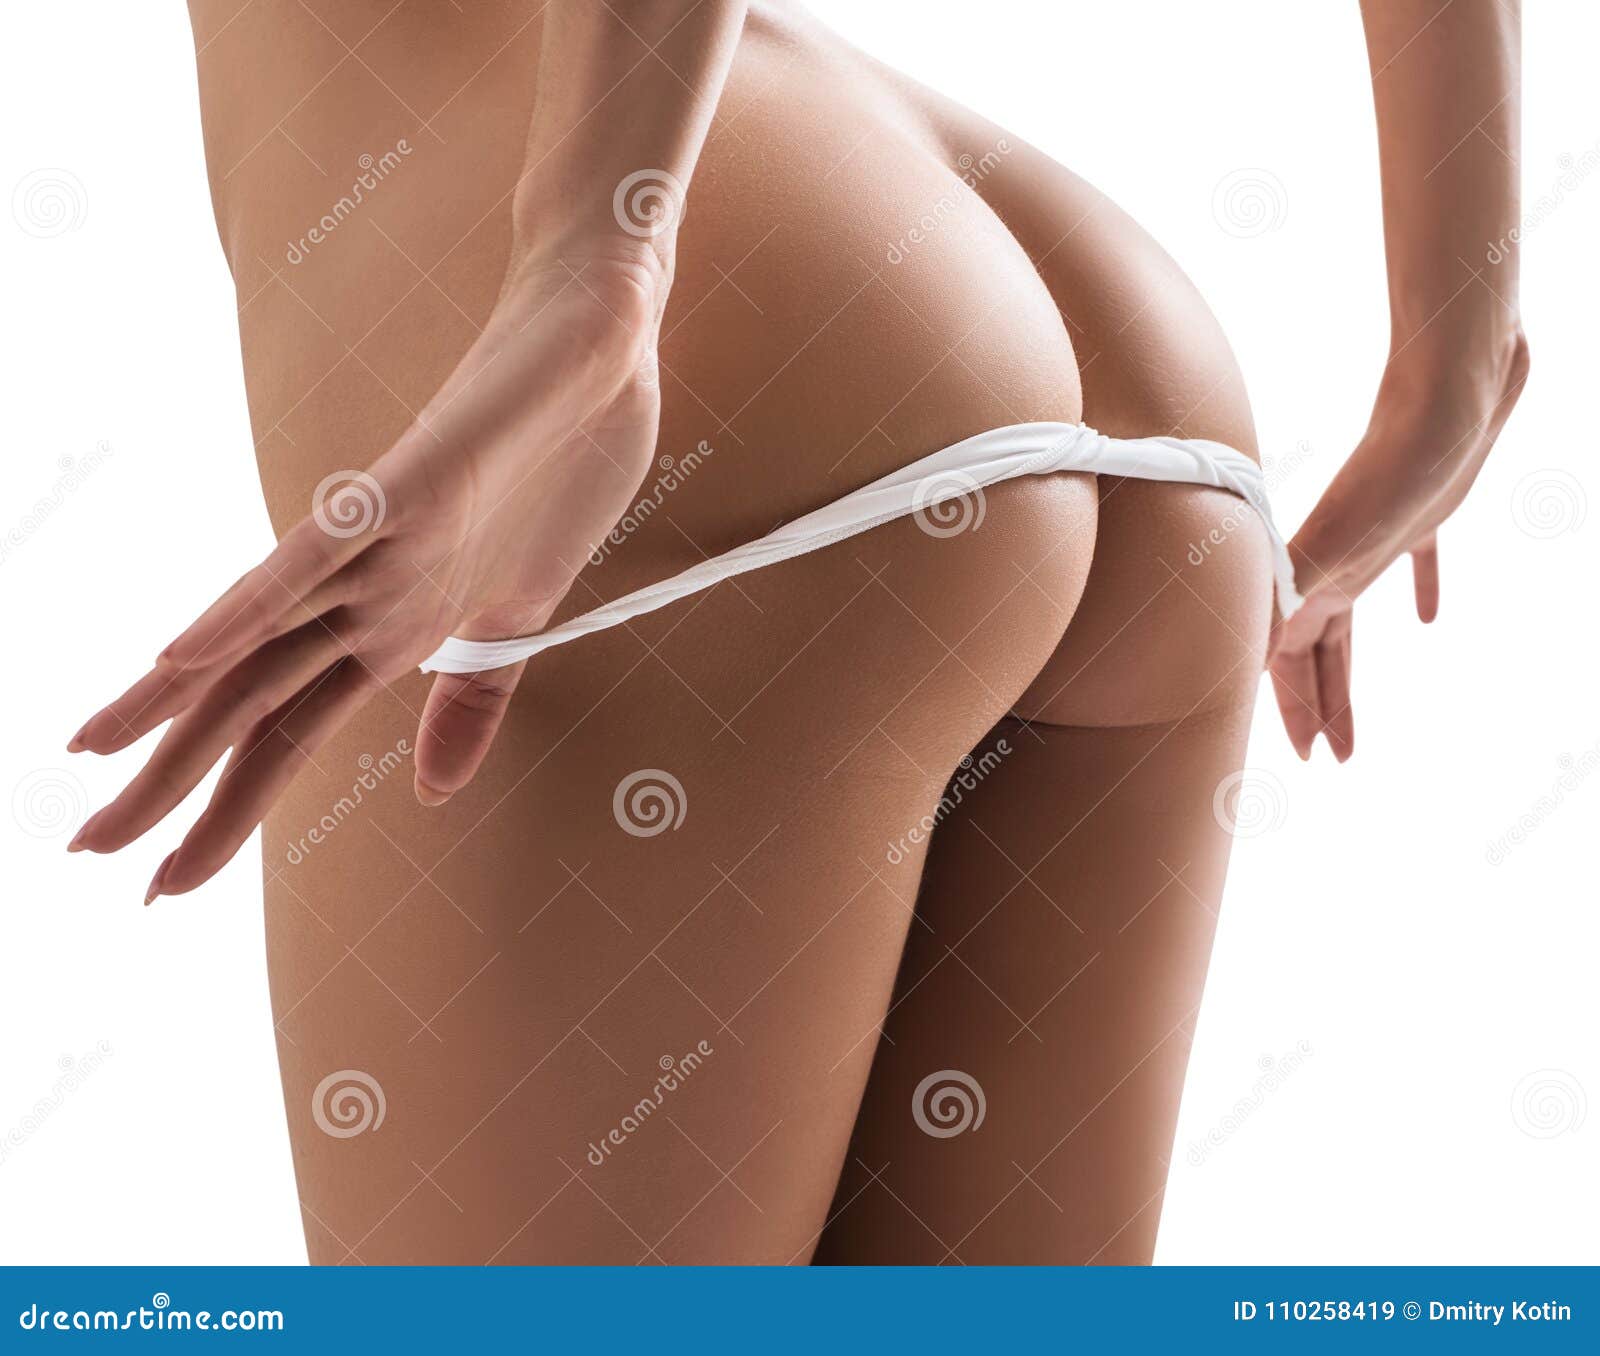 Beautiful Woman Taking Off Her White Panties. Stock Image - Image